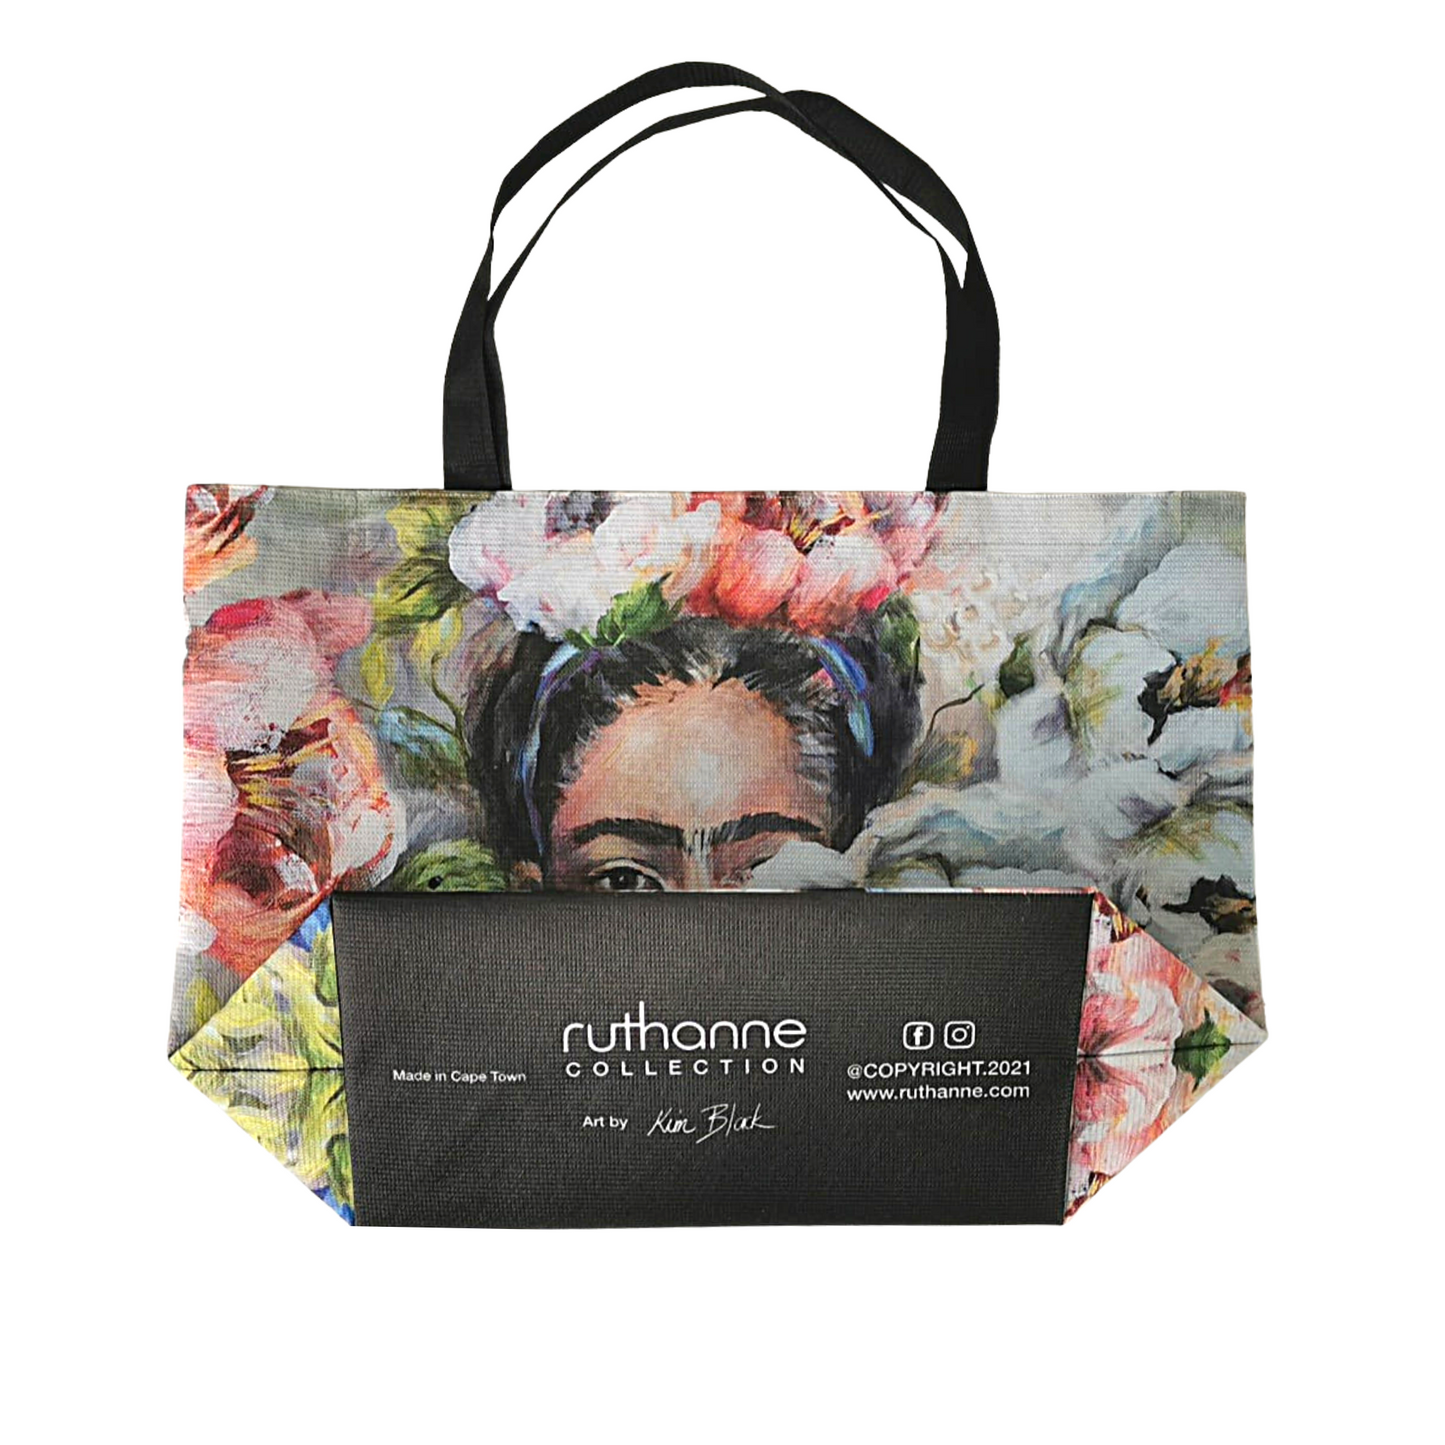 Frida Recycled Shopper Bag